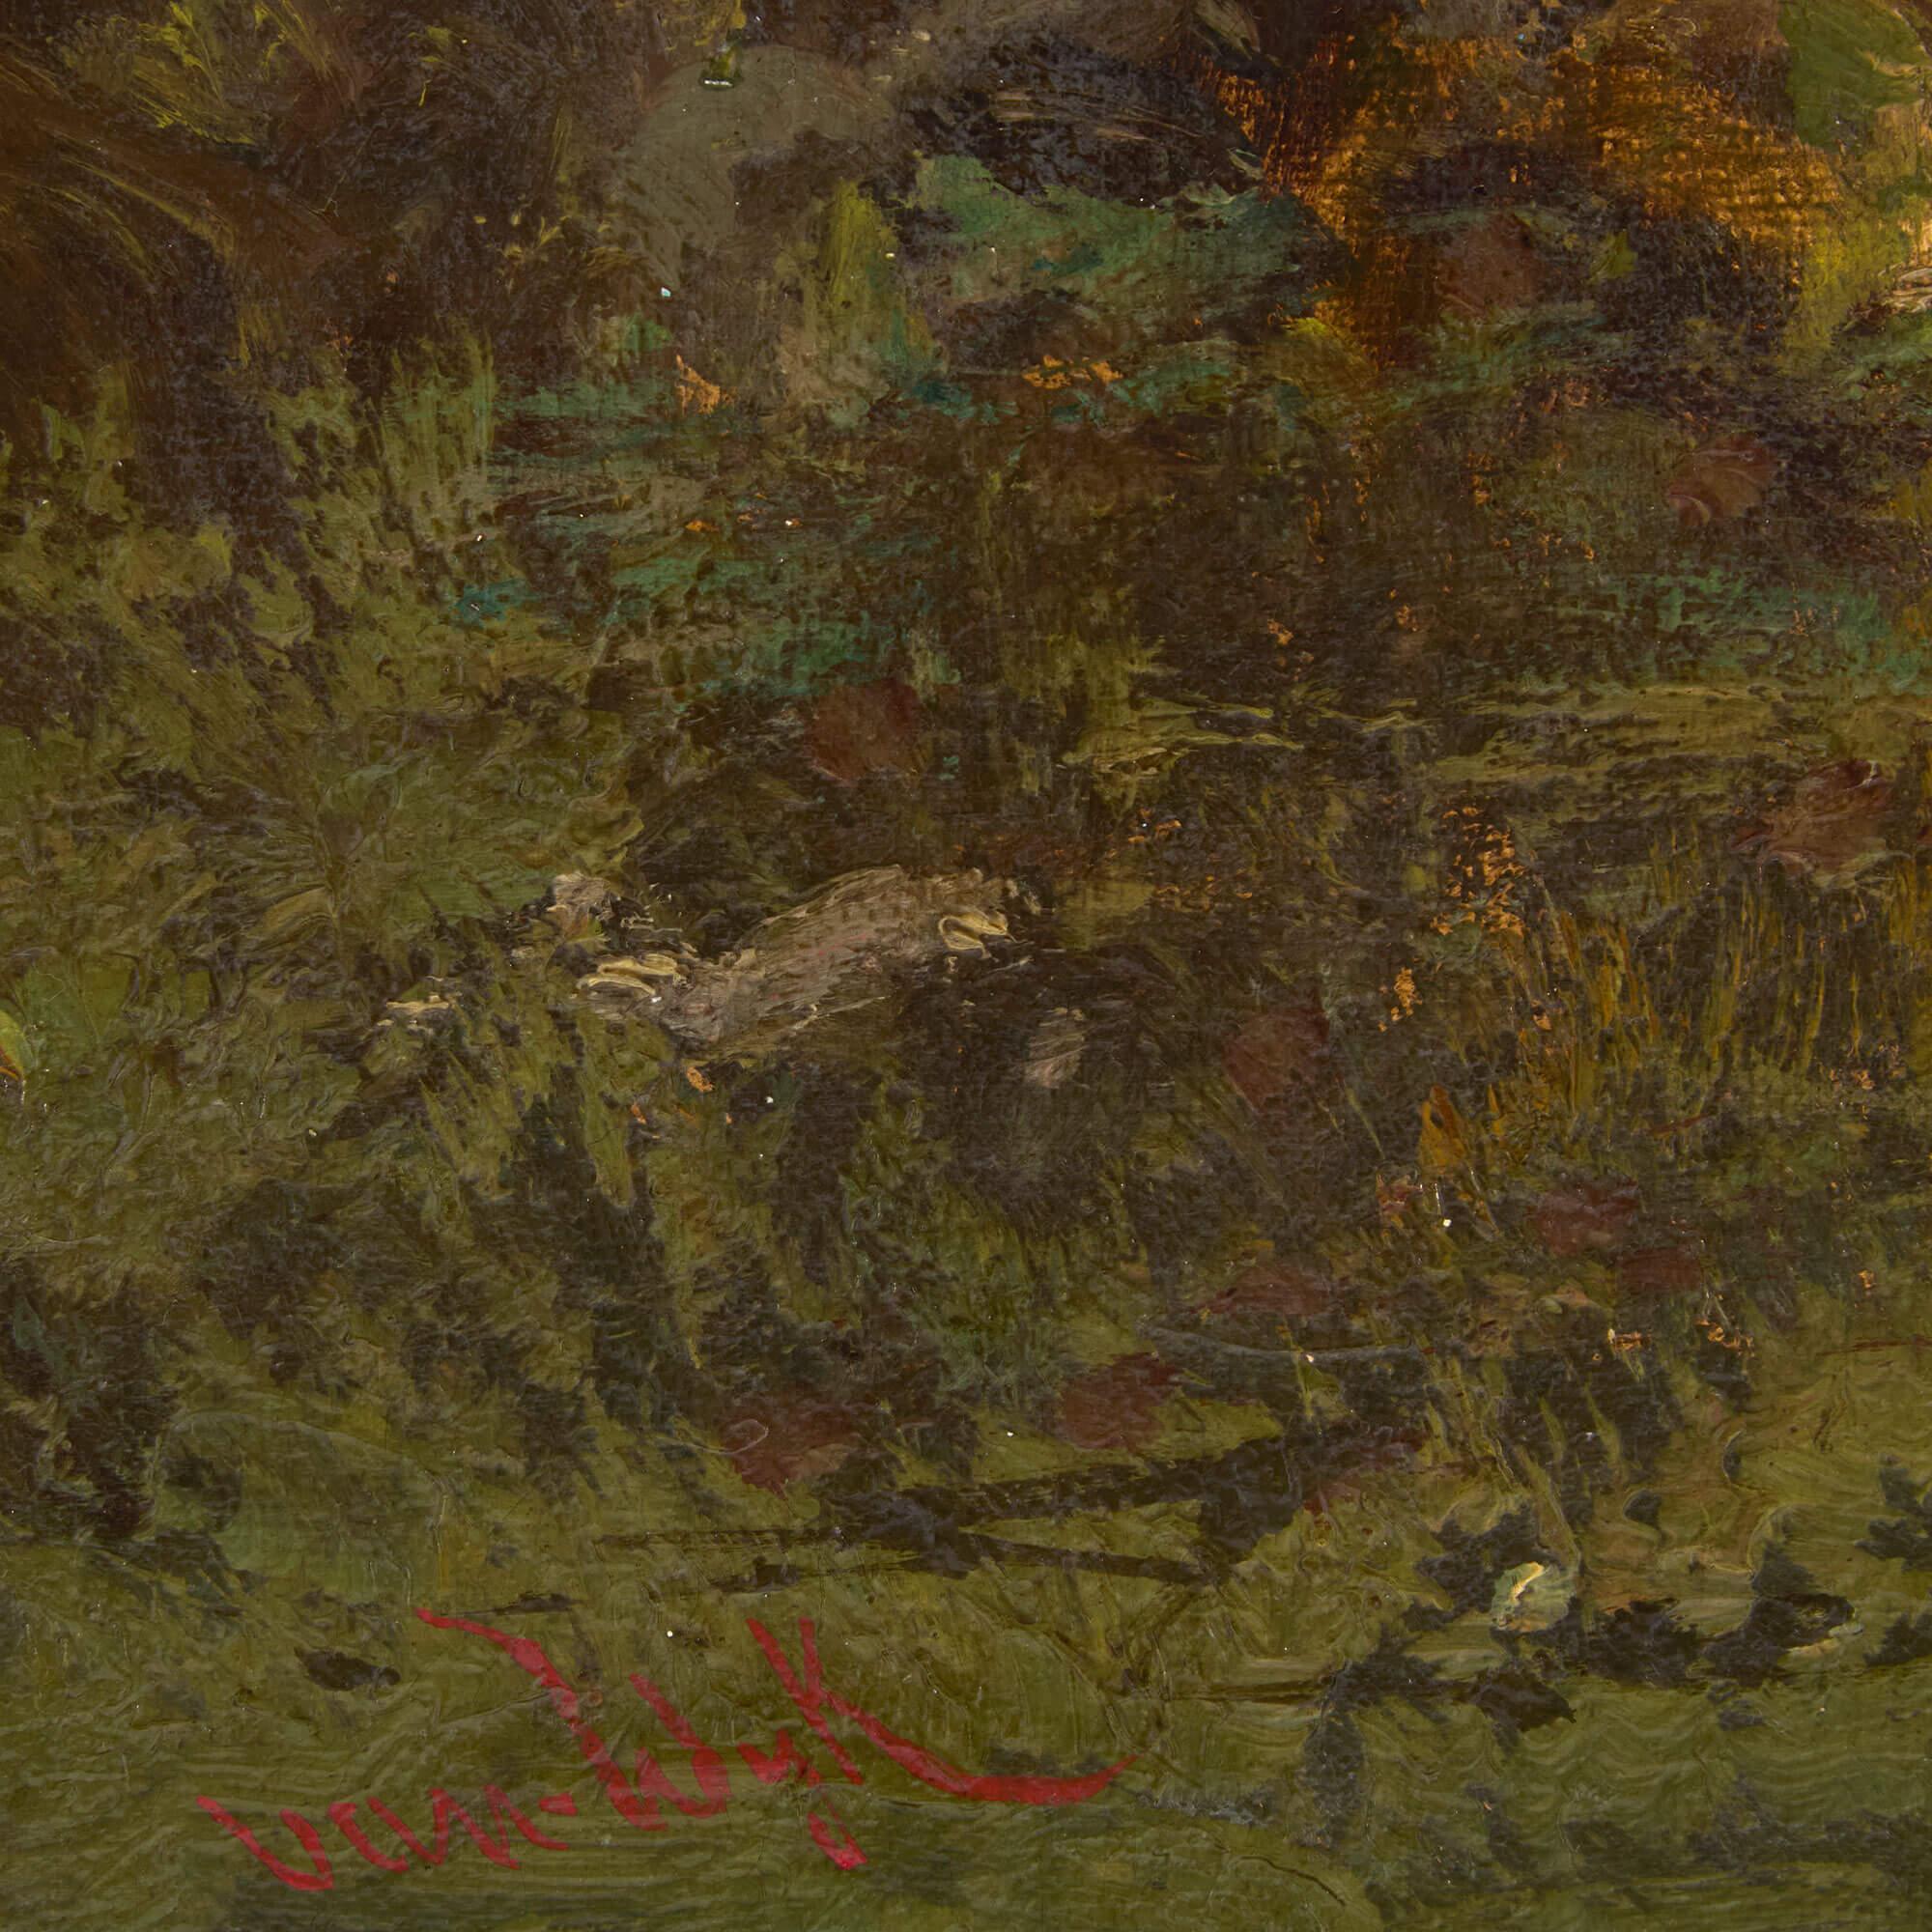 Set of Four Orientalist Landscape Paintings by van Wijk  For Sale 7